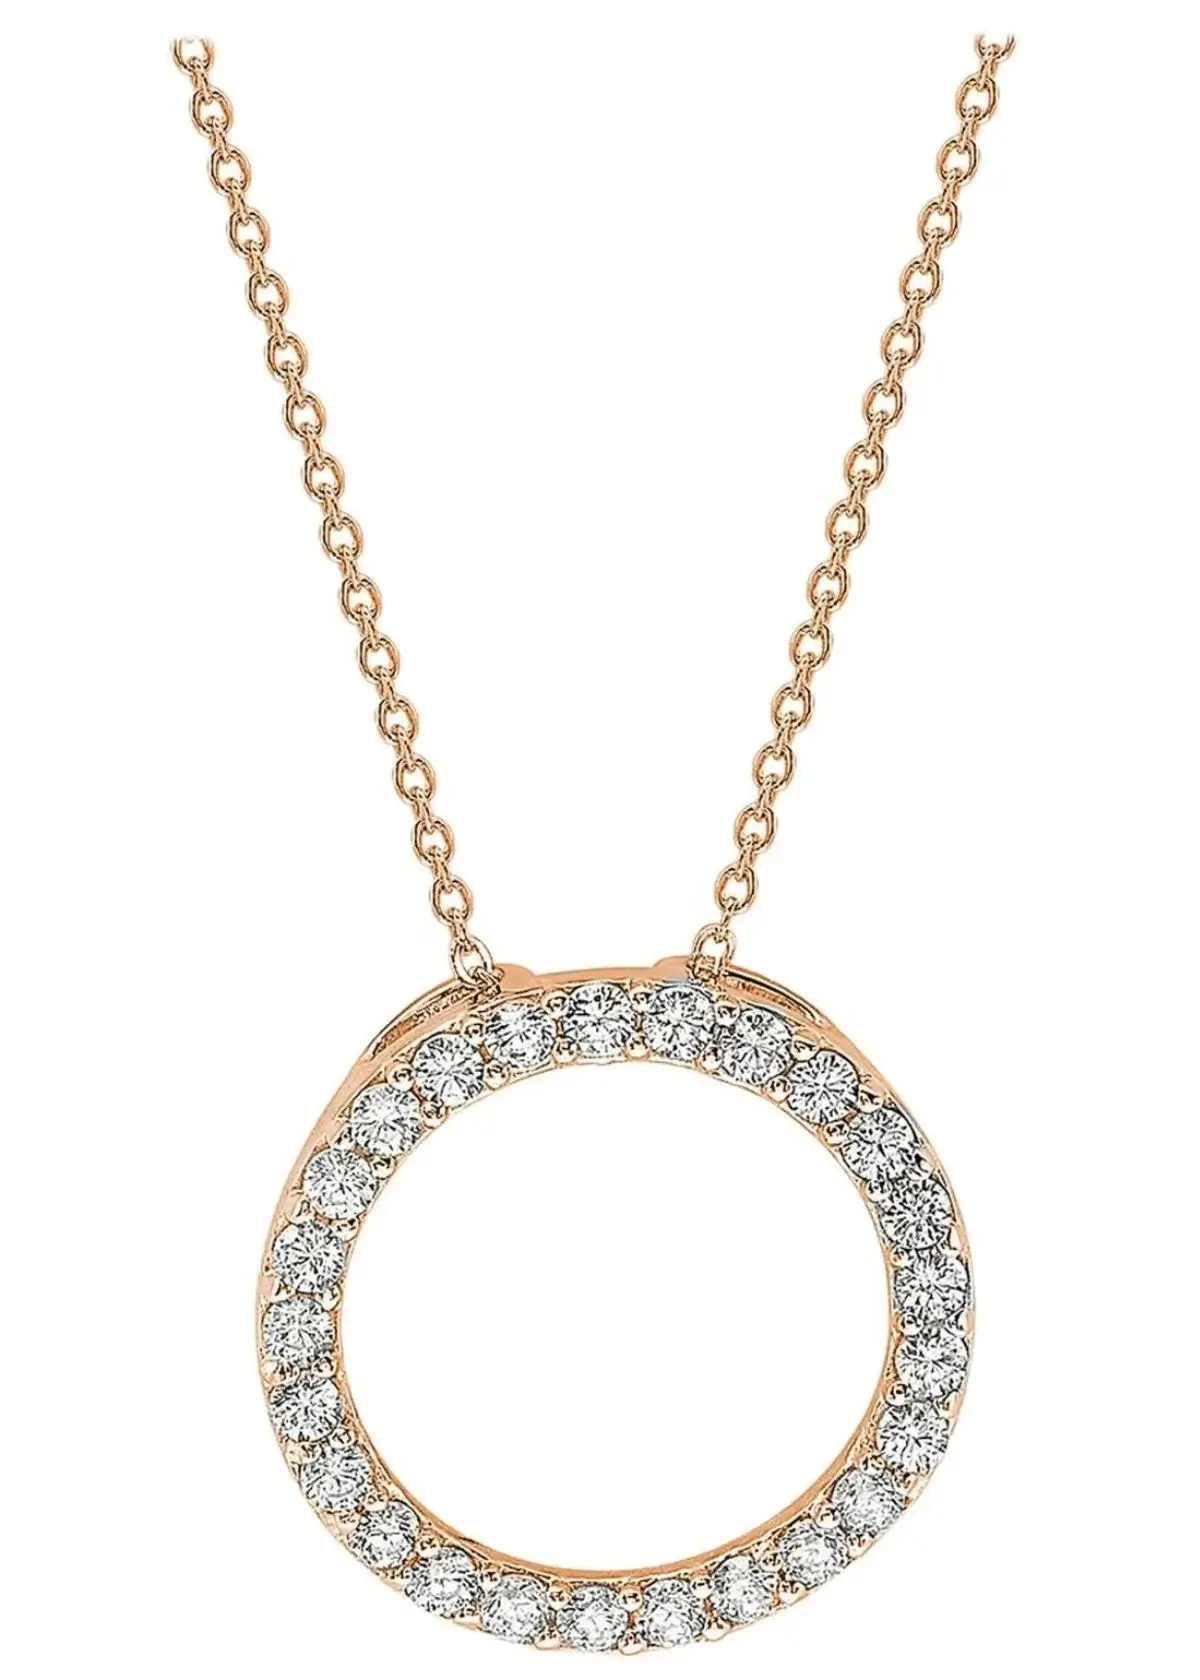 How are the diamonds arranged on a diamond eternity necklace?